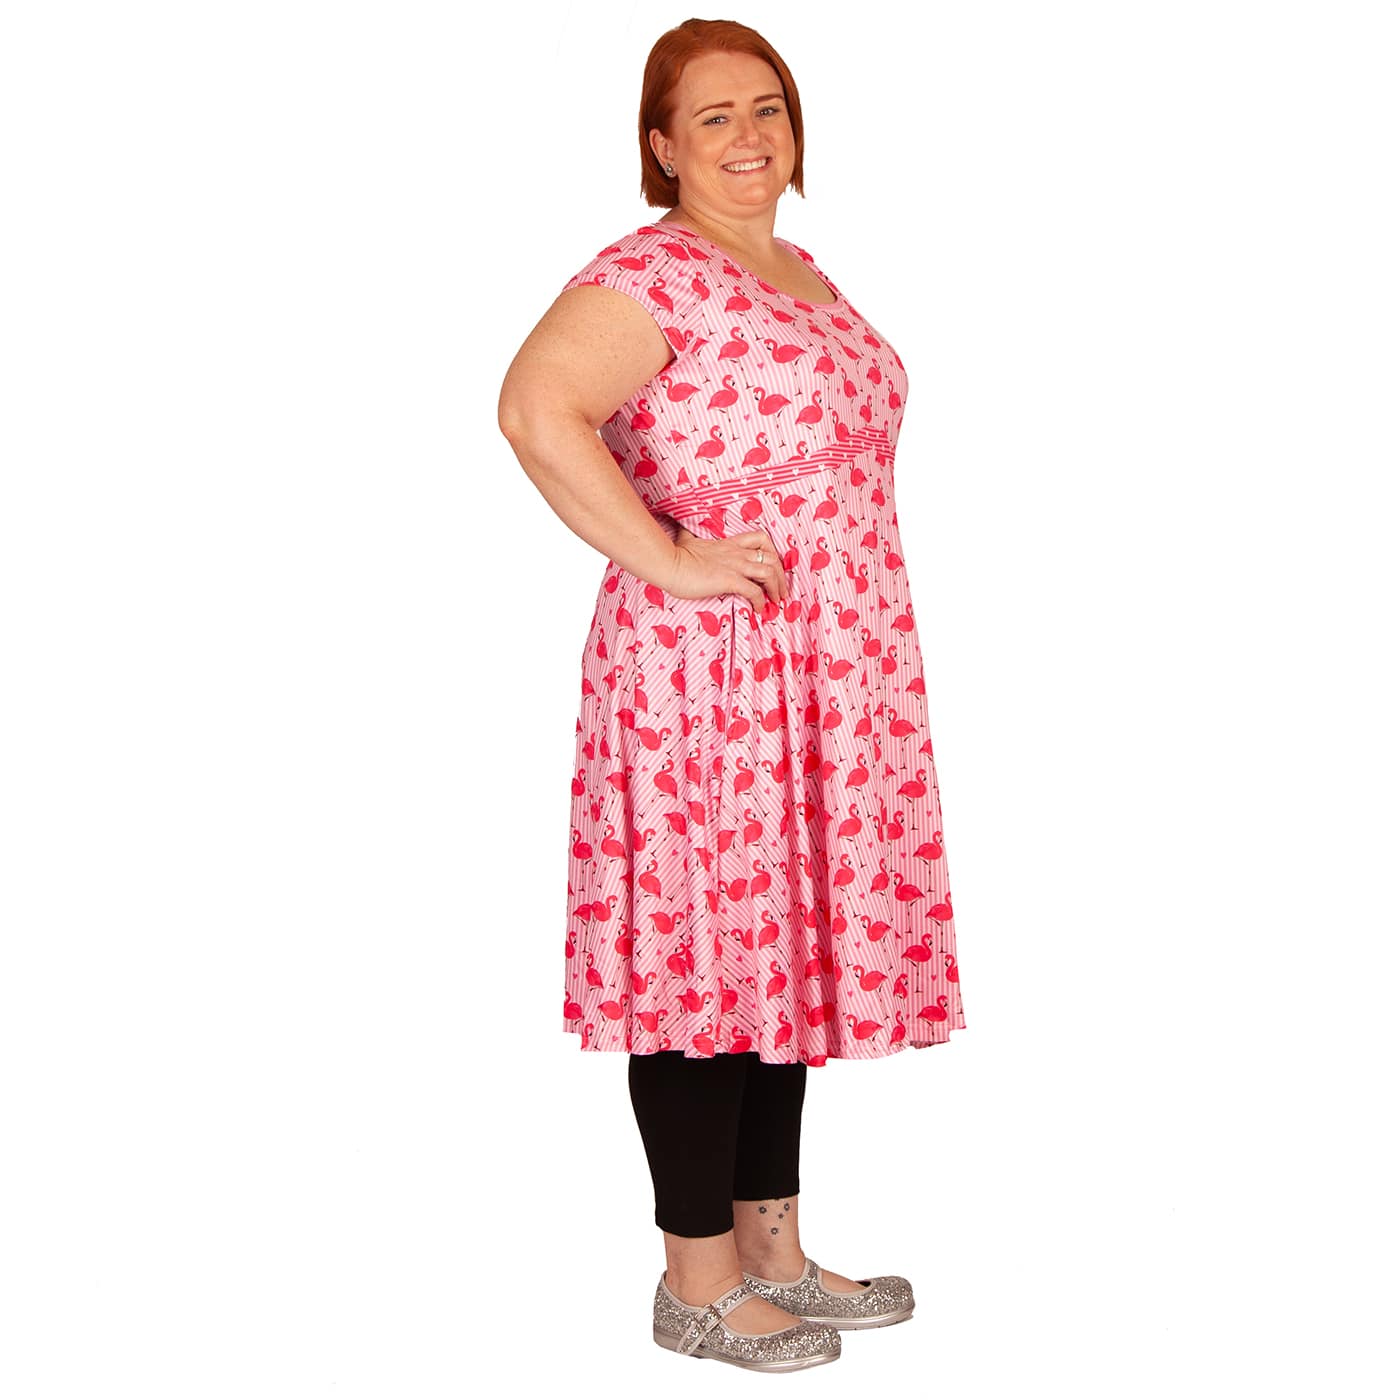 Flamingo Love Tea Dress by RainbowsAndFairies.com (Flamingo - Pink & White Stripes - Love Hearts - Hot Pink - Rock & Roll - Dress With Pockets - Rockabilly - Vintage Inspired) - SKU: CL_TEADR_FLOVE_ORG - Pic 08